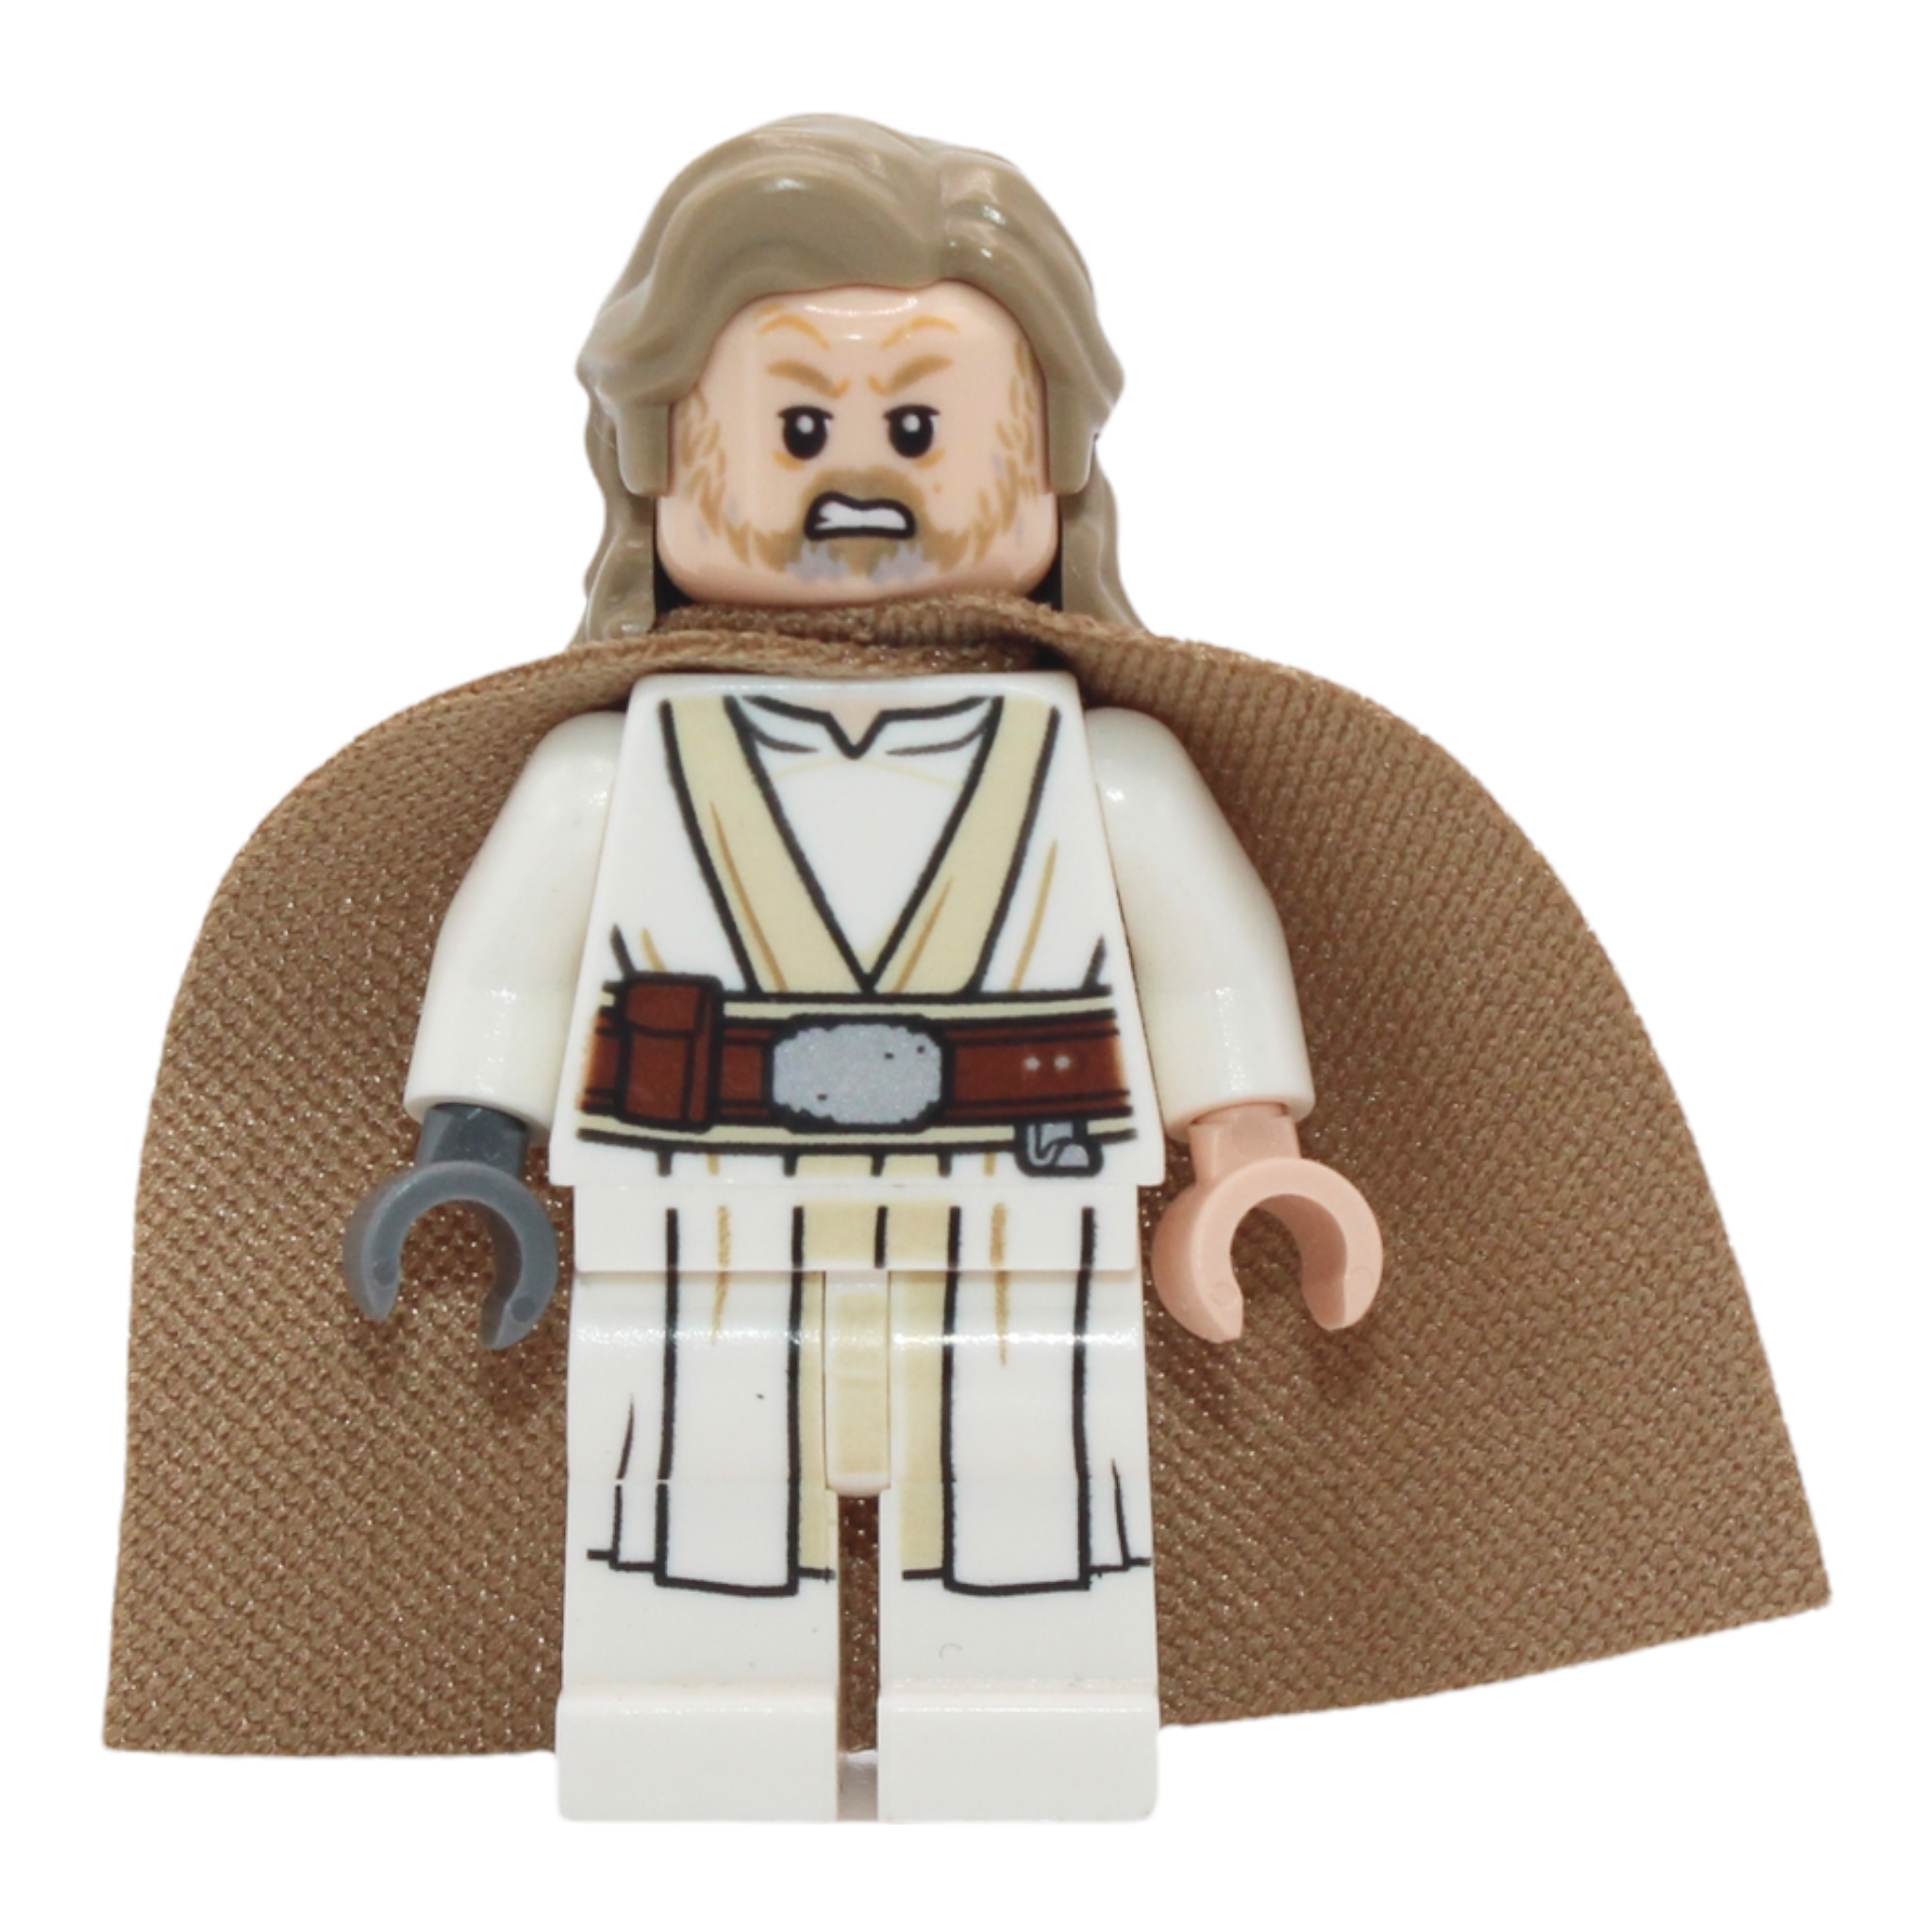 Luke Skywalker (Ahch-To, white robes)